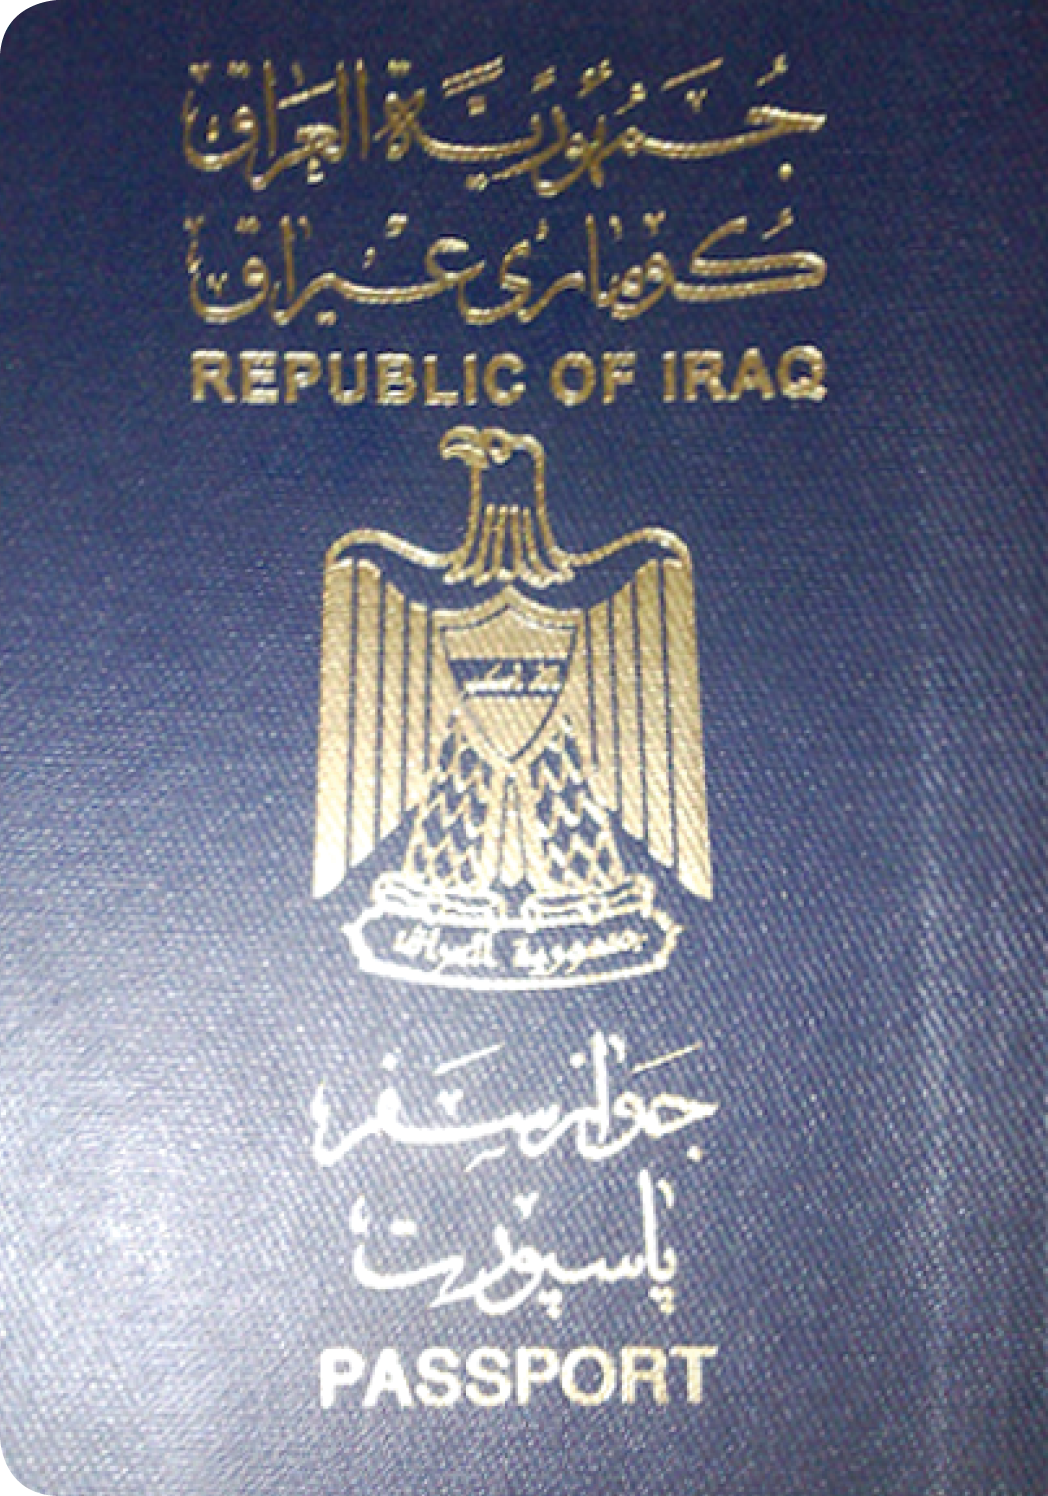 A regular or ordinary Iraqi passport - Front side